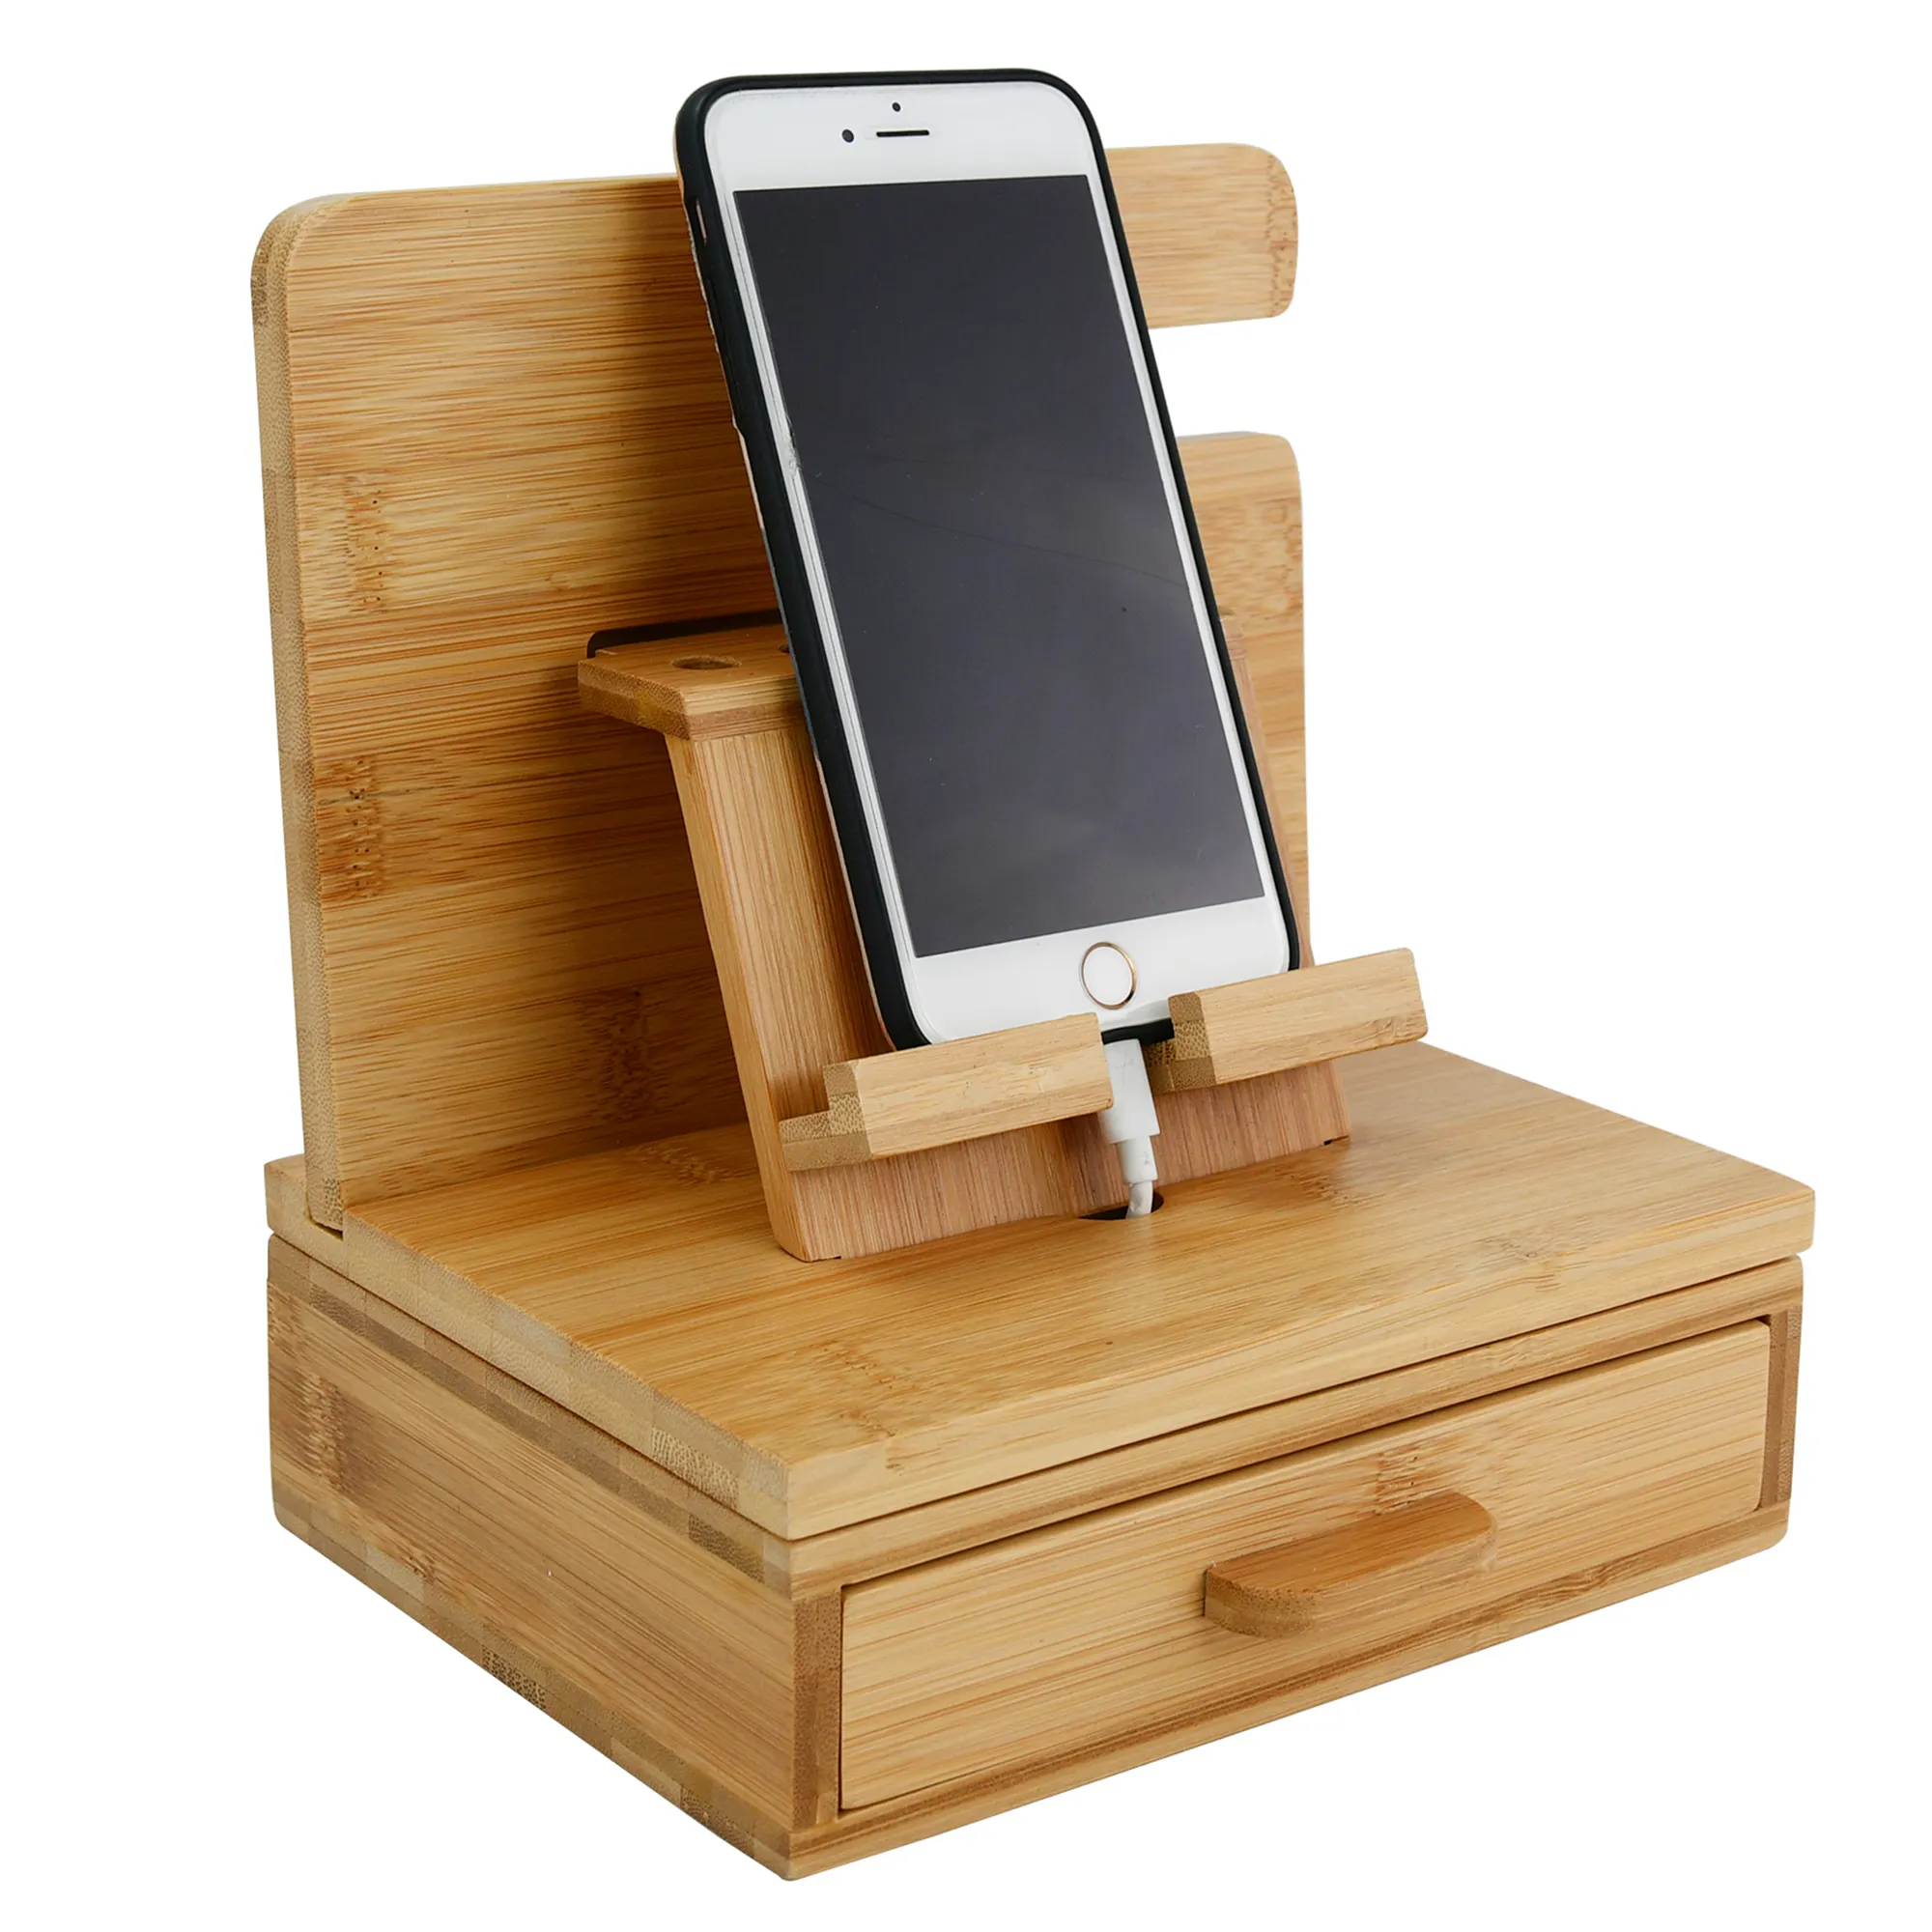 Wood Docking Station Nightstand Organizer Phone Wallet Watch Key Holder Tablet Tech Gadgets Charging Dock Desk